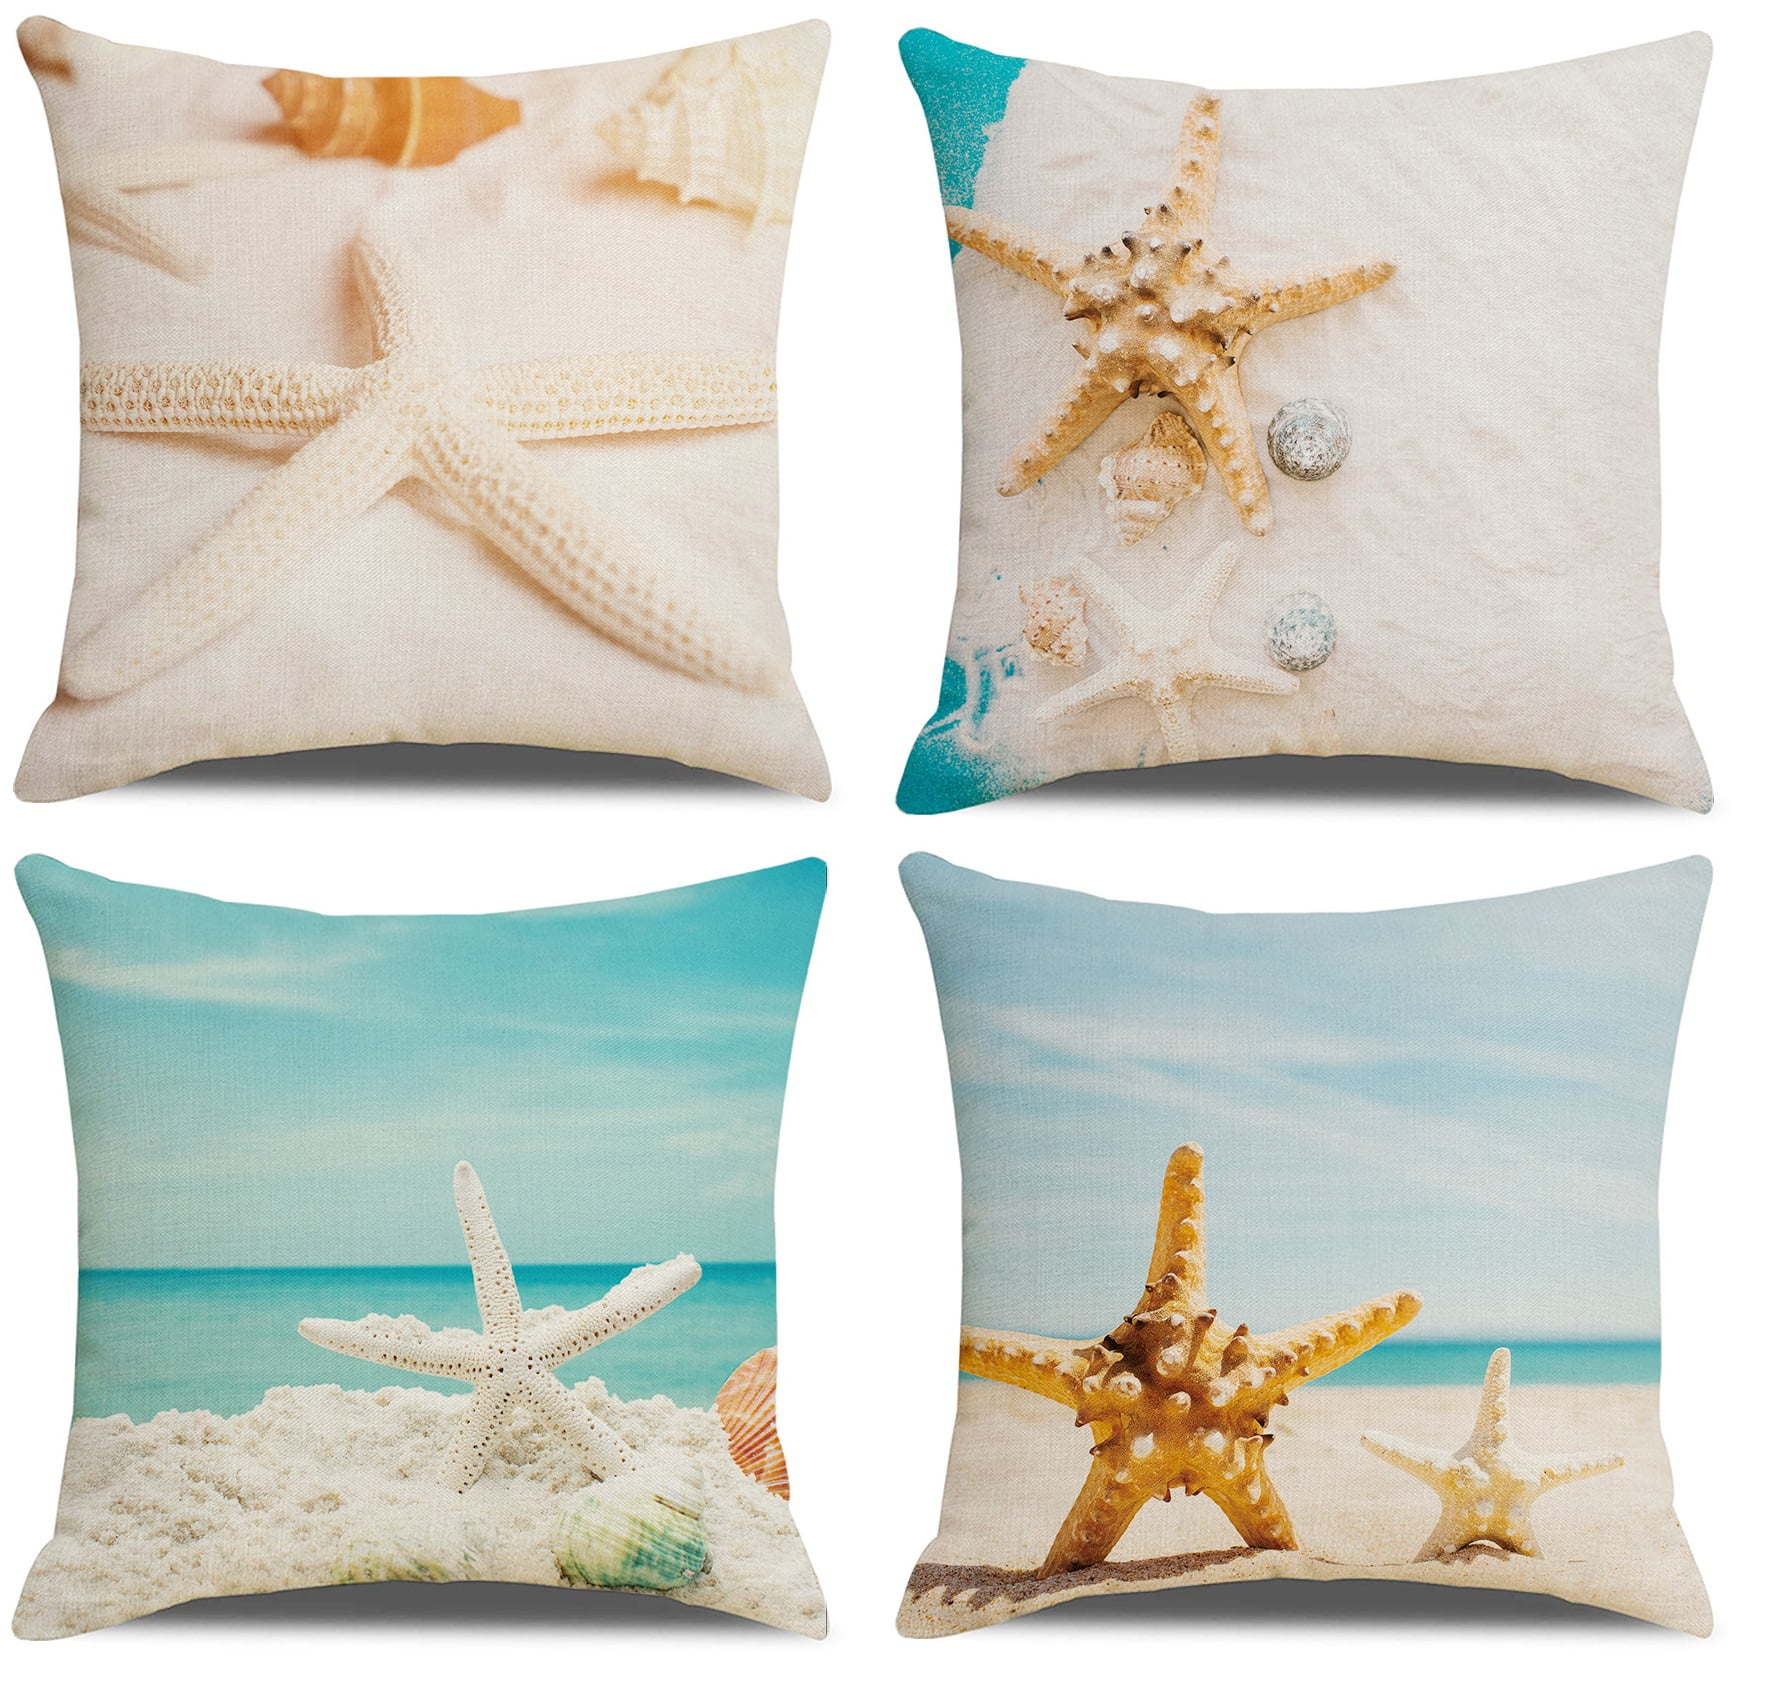 Rustic Beach Burlap Sealife Pillows